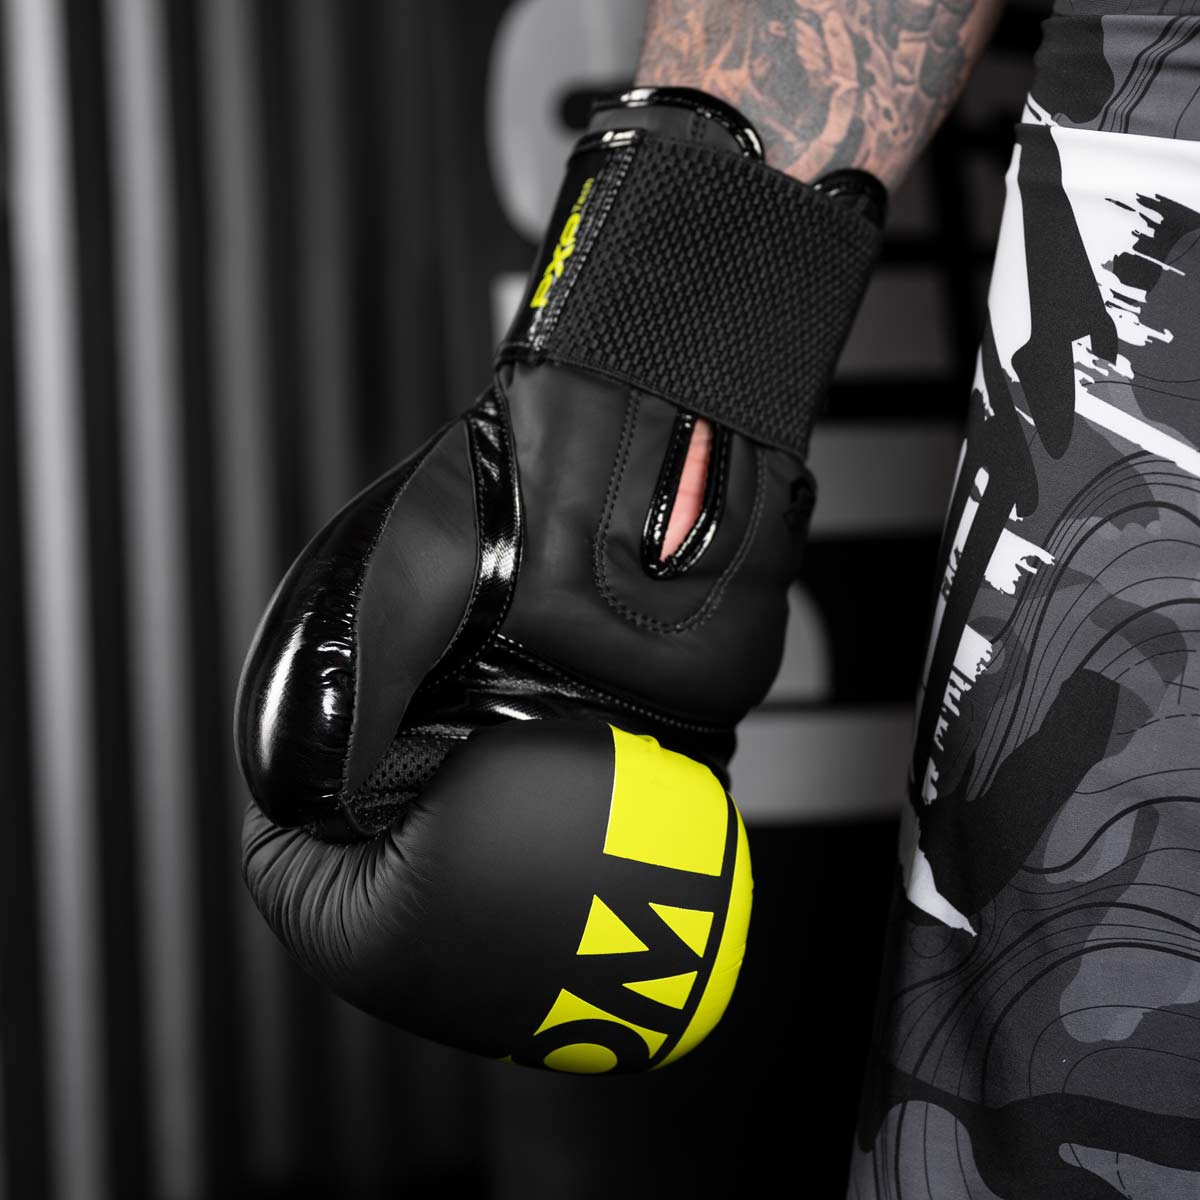 Boxing gloves NEON | for MMA & Boxing - PHANTOM ATHLETICS